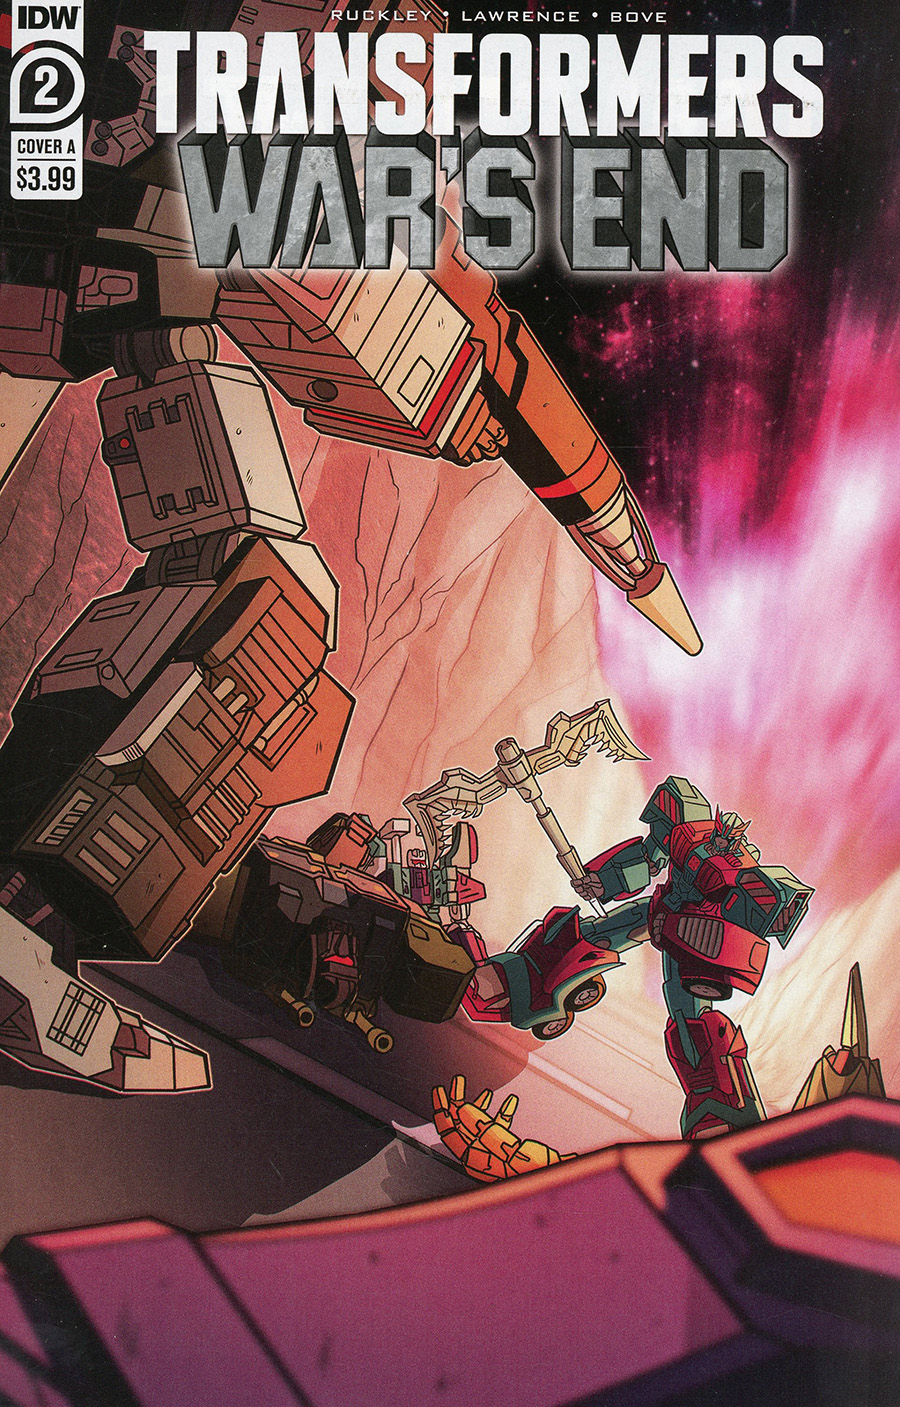 Transformers Wars End #2 Cover A Regular Chris Panda Cover